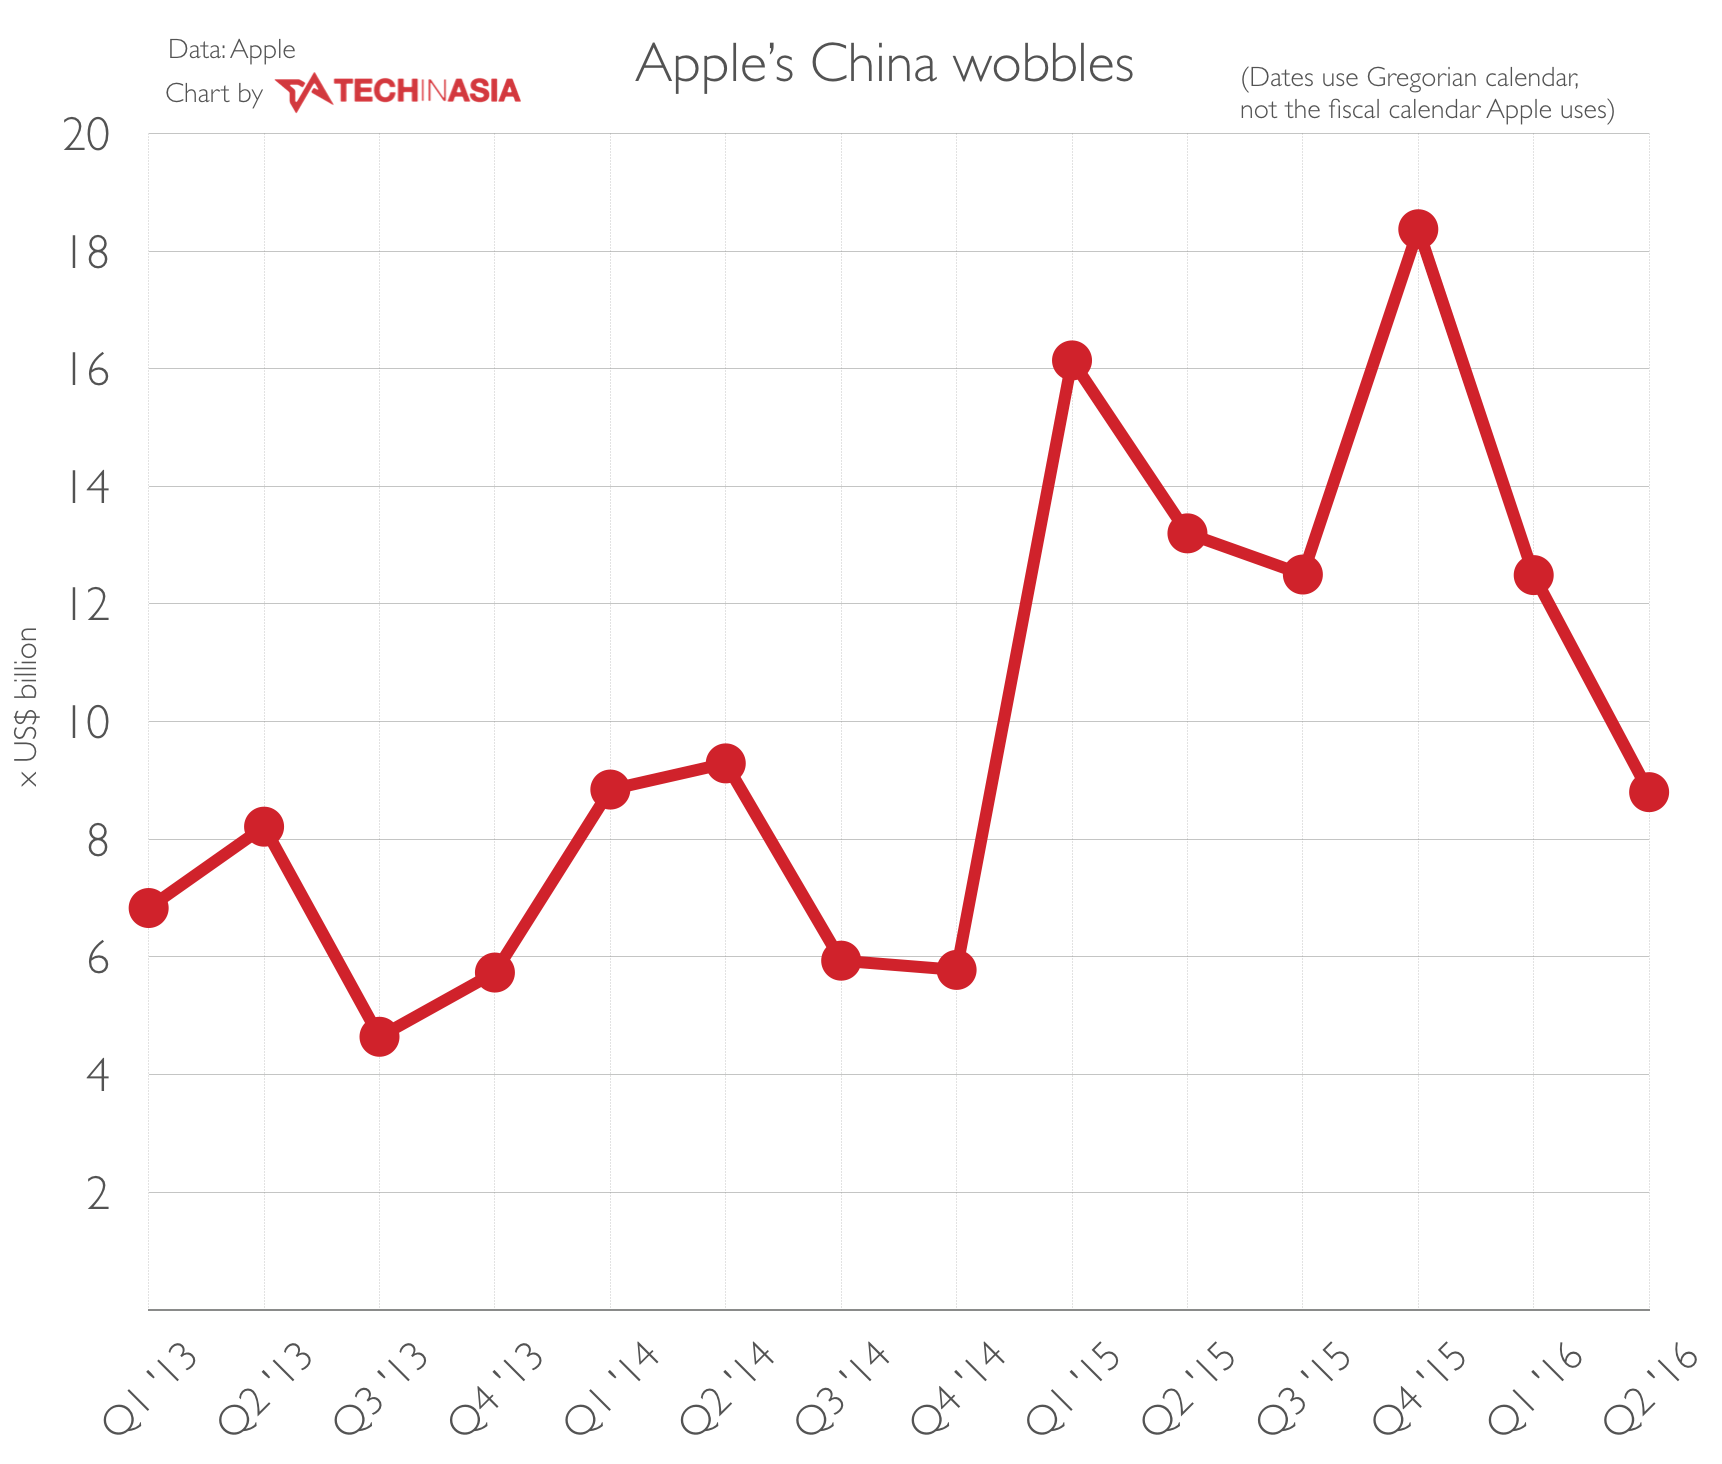 kranium leje George Hanbury Apple's China revenue dropped off a cliff this quarter